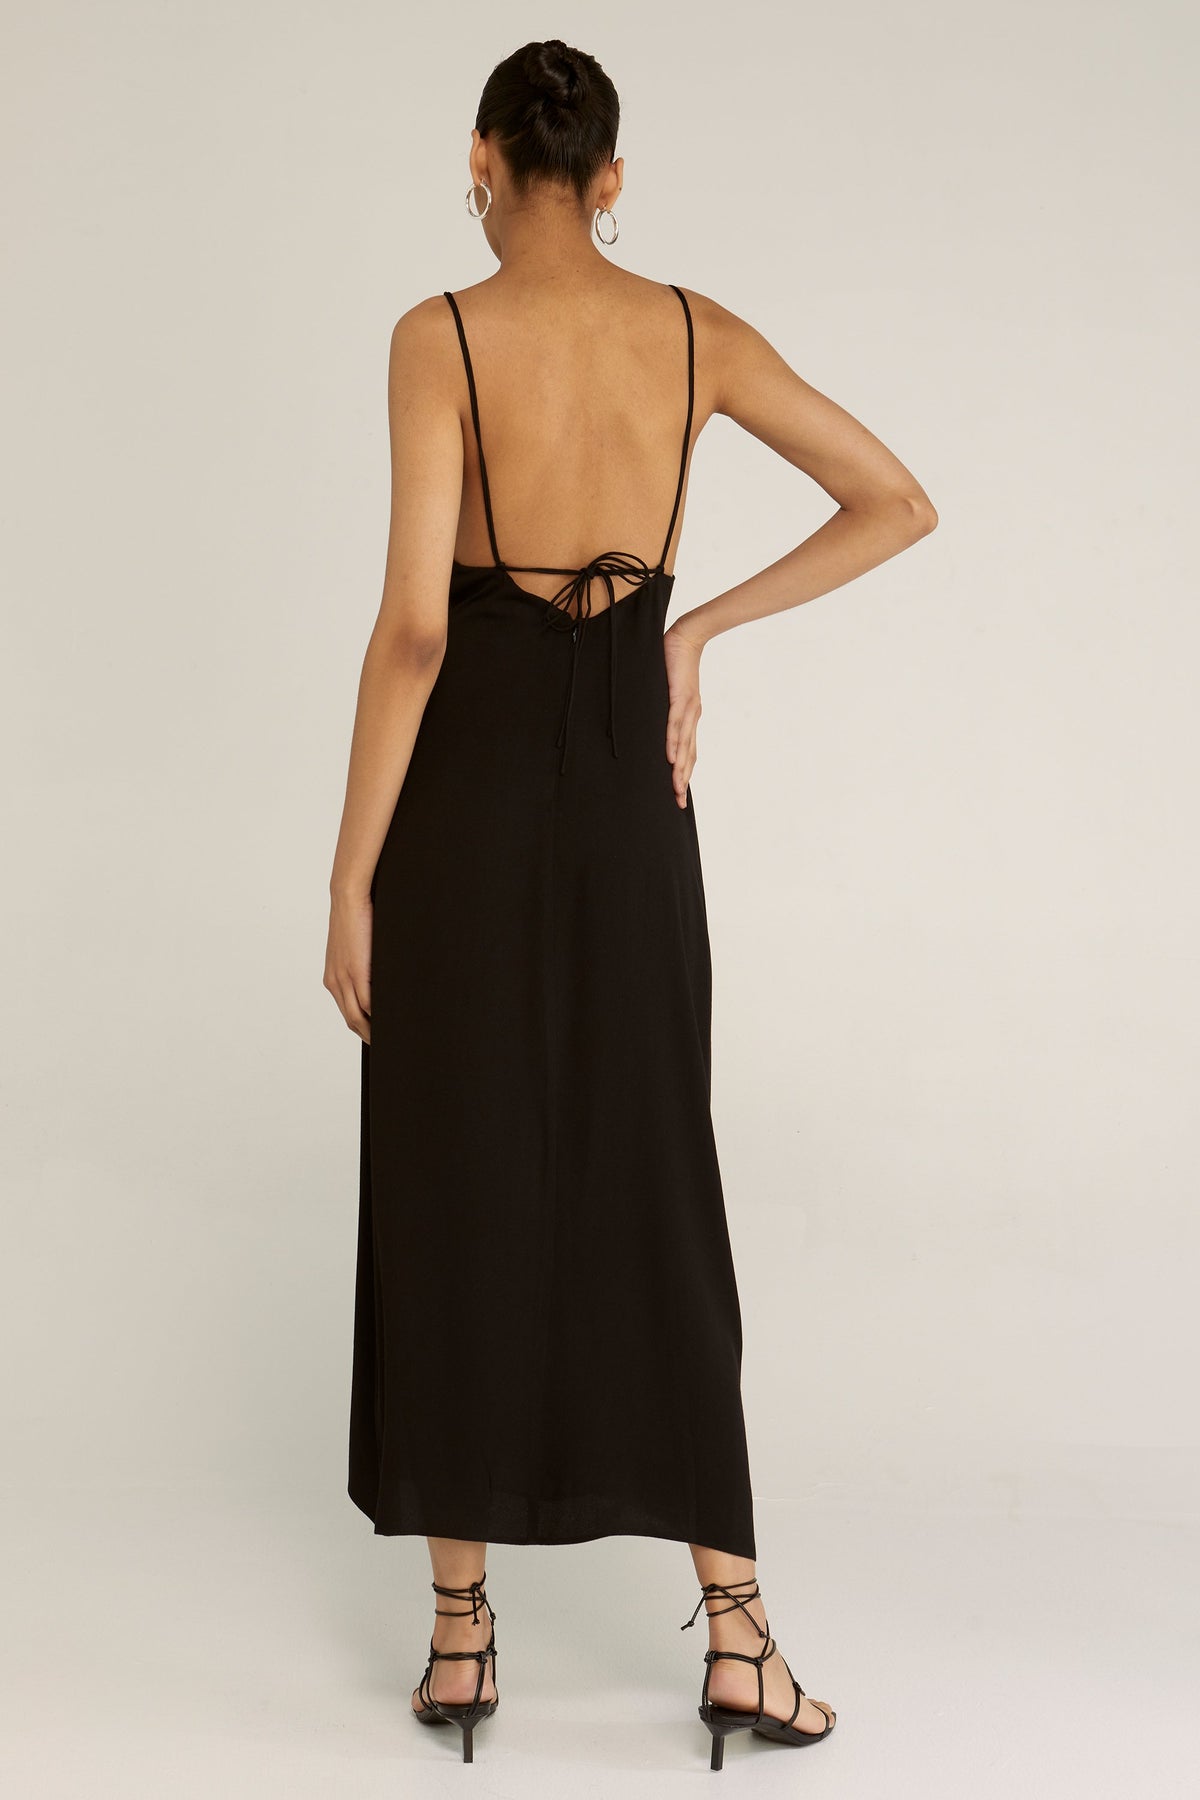 Third Form Ring-Out Slip Dress - Black – Dress Hire AU